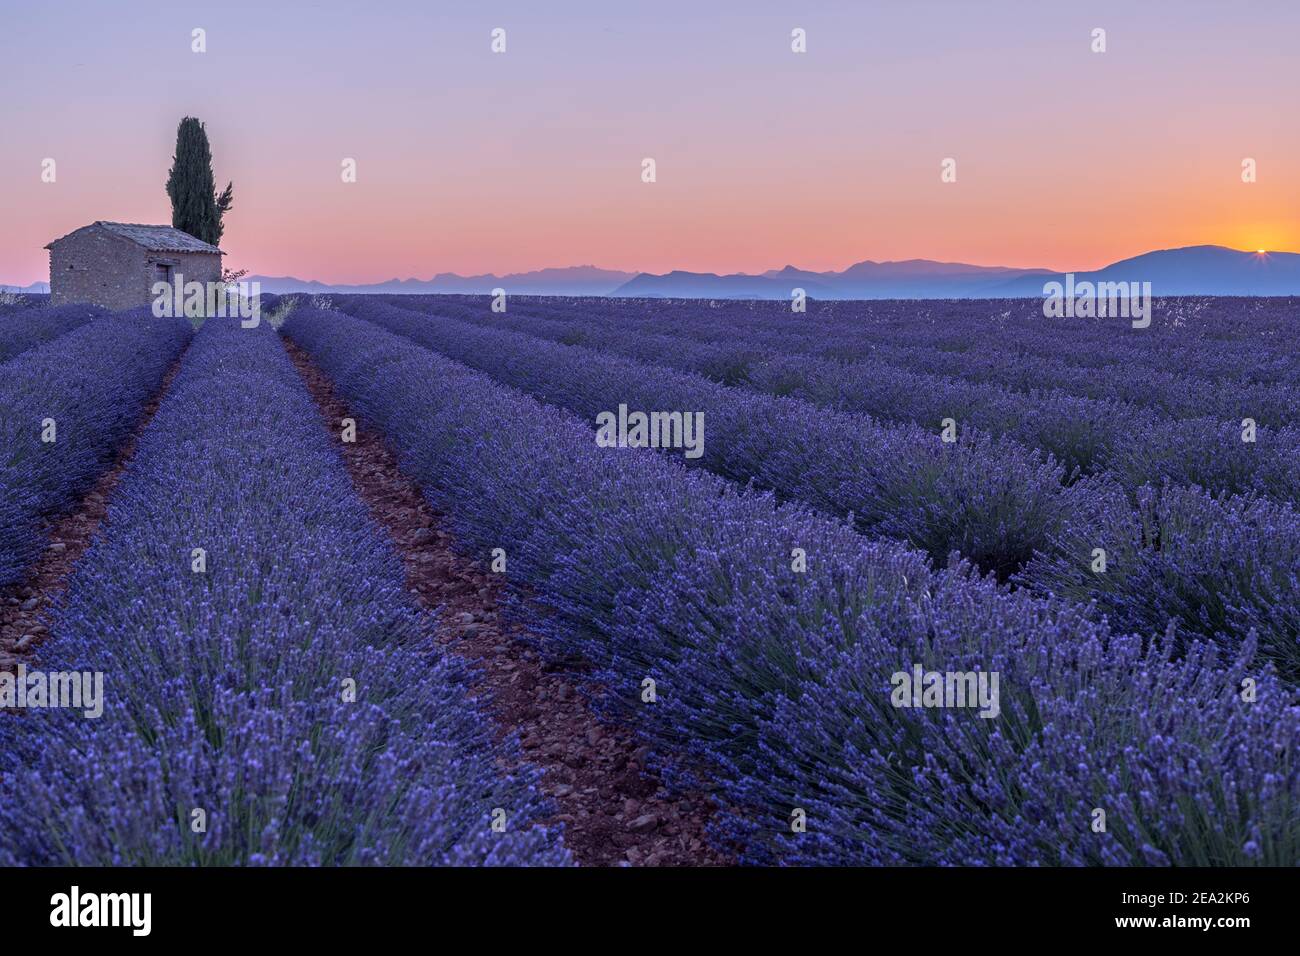 Lavender field at sunrise, full bloom purple flowers. Provence, France Stock Photo